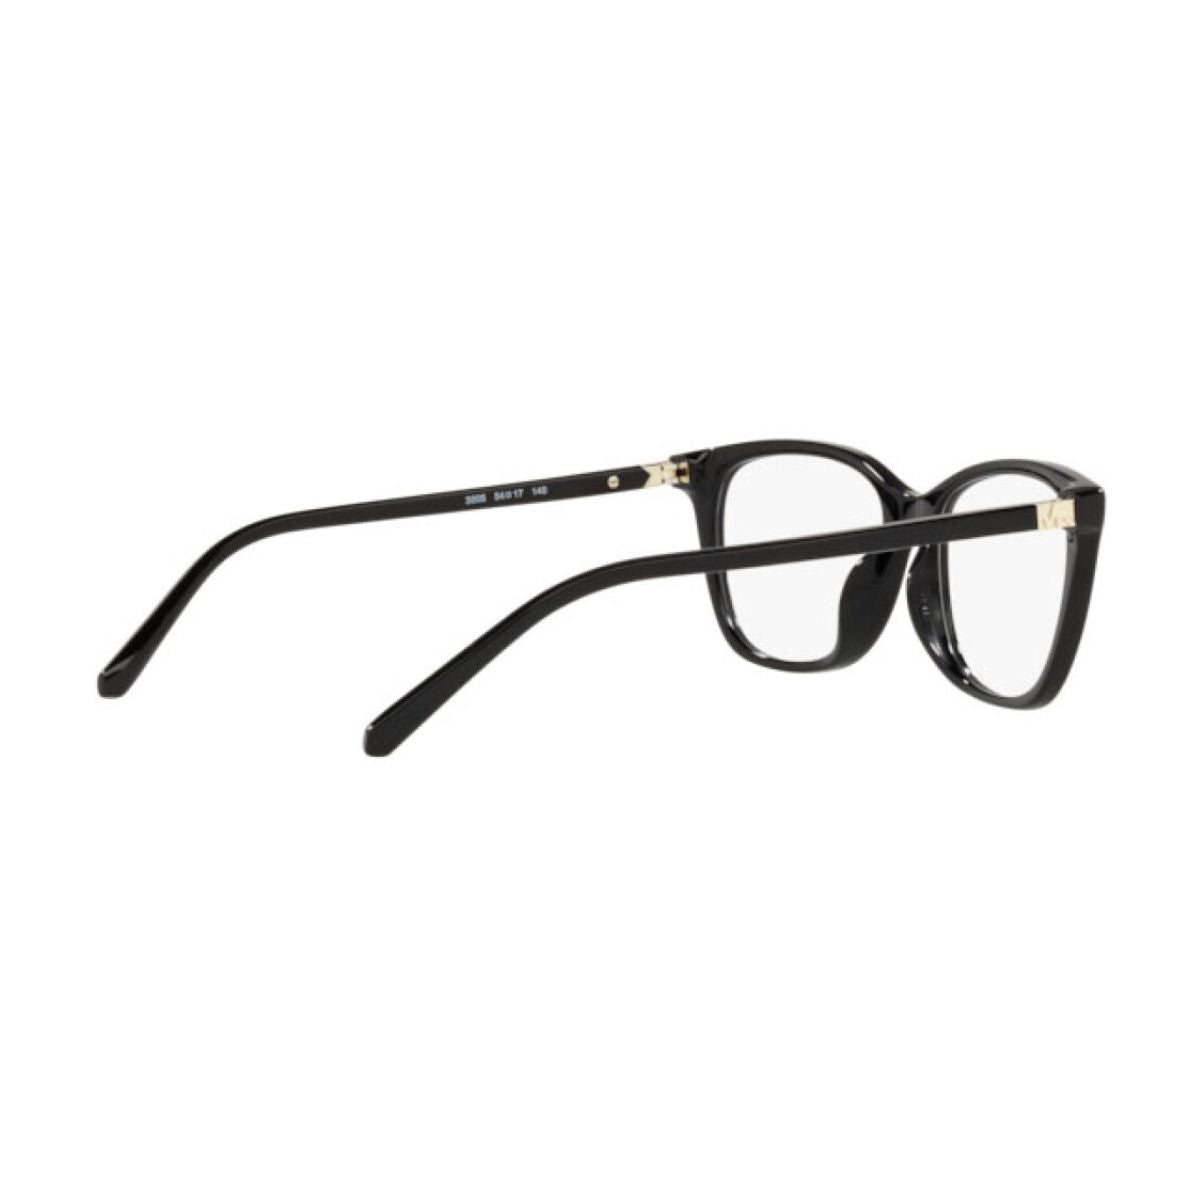 "Michael Kors 4085U 3005 online eyeglasses frame for women's at optorium"